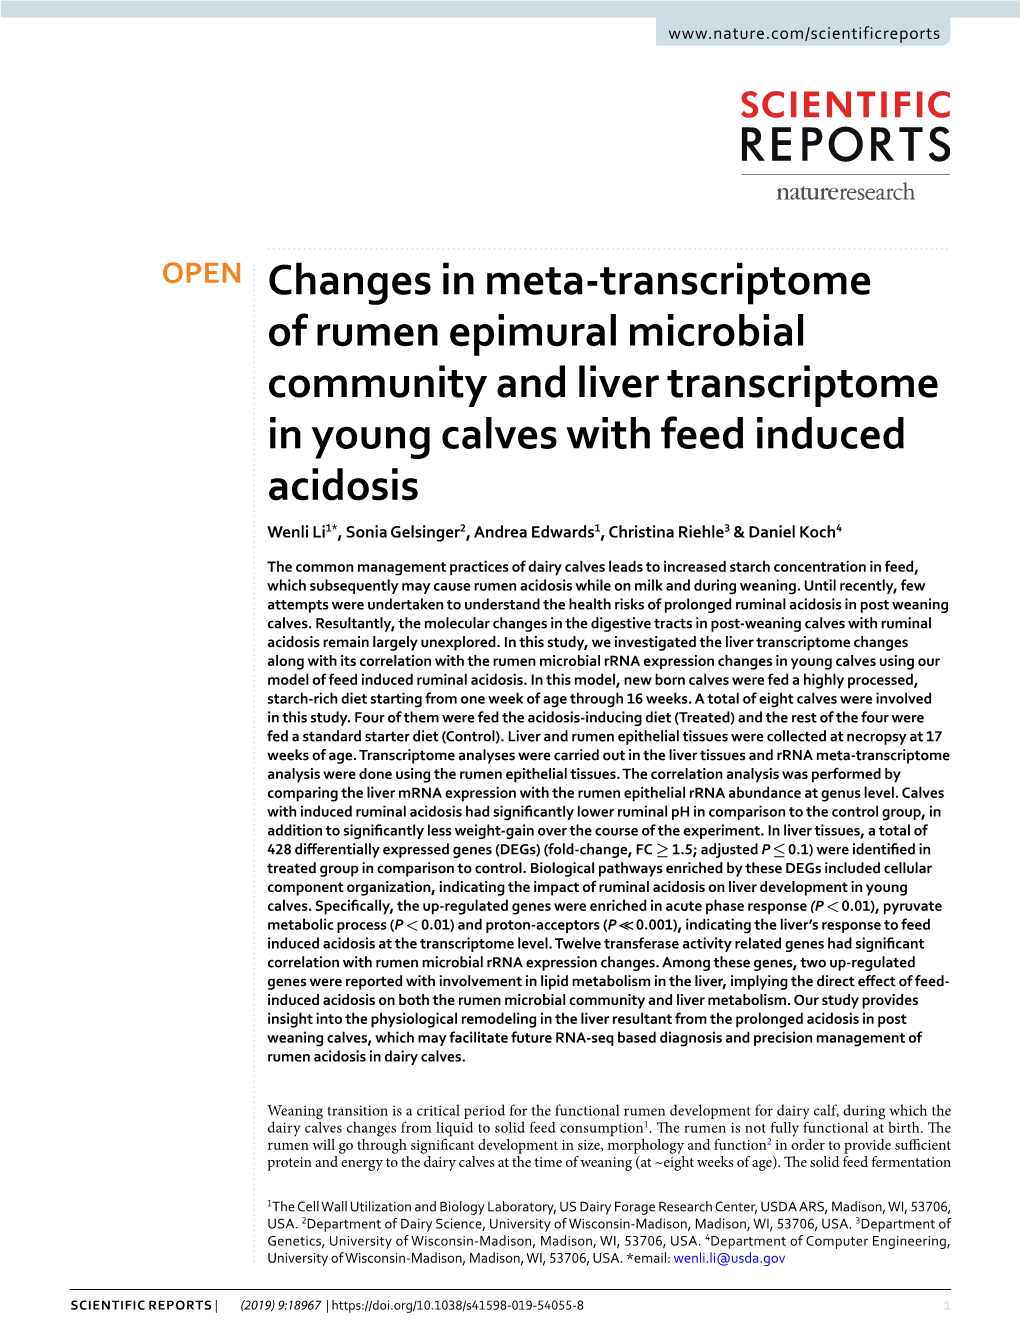 Changes in Meta-Transcriptome of Rumen Epimural Microbial